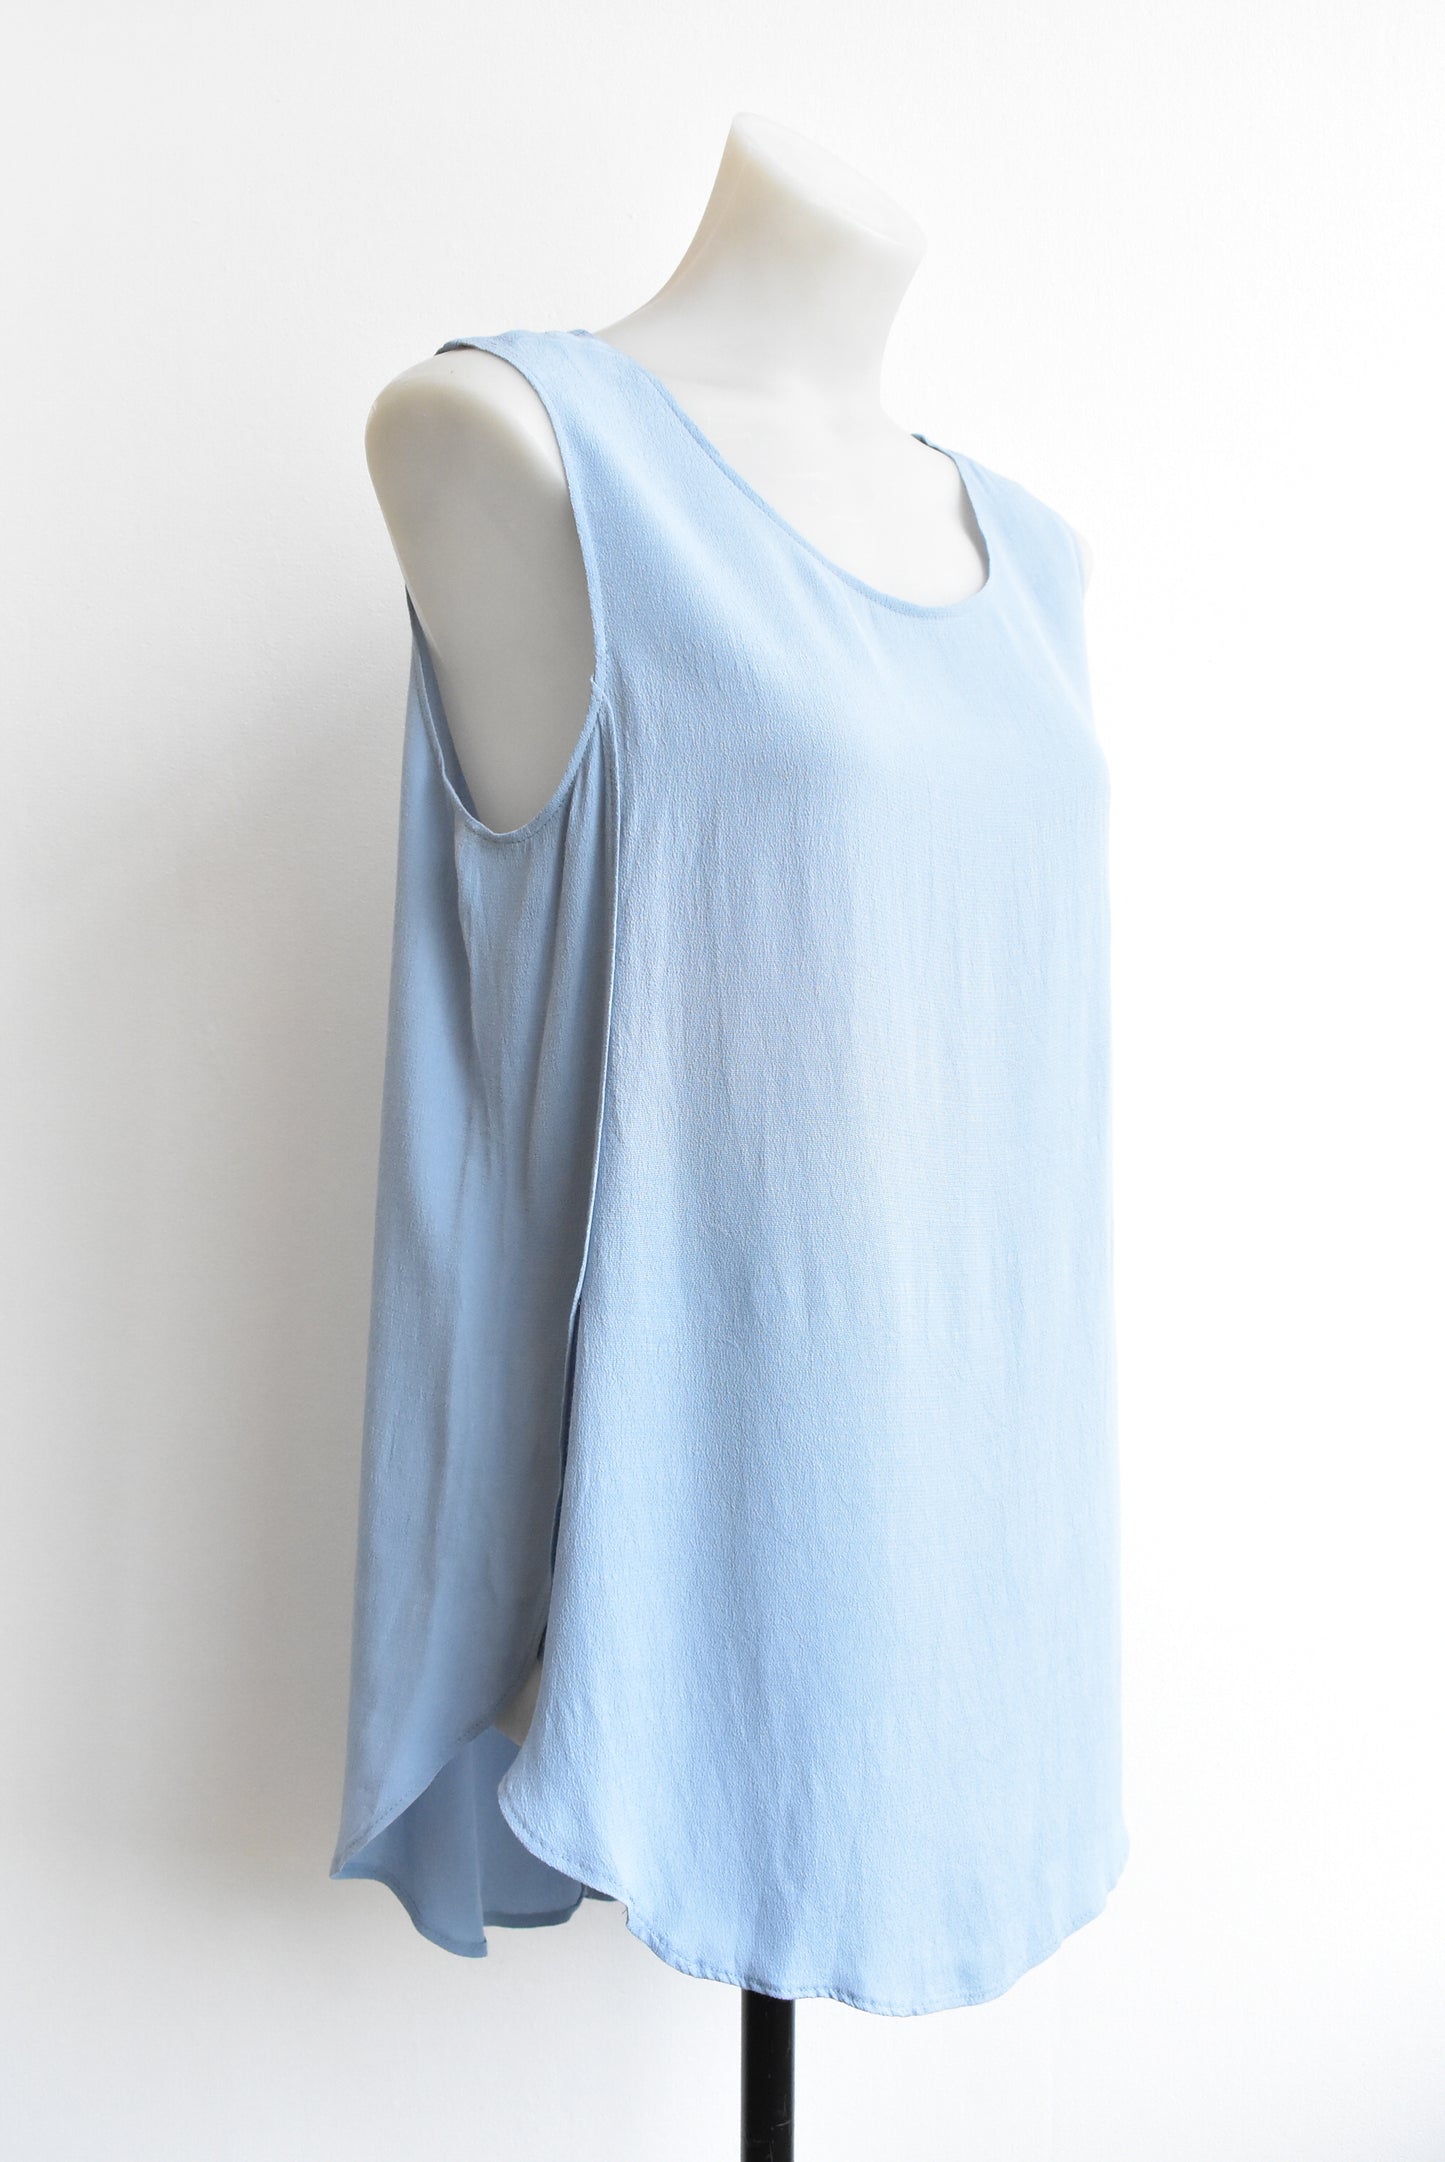 Liam Ruby powder blue sleeveless top, size 8